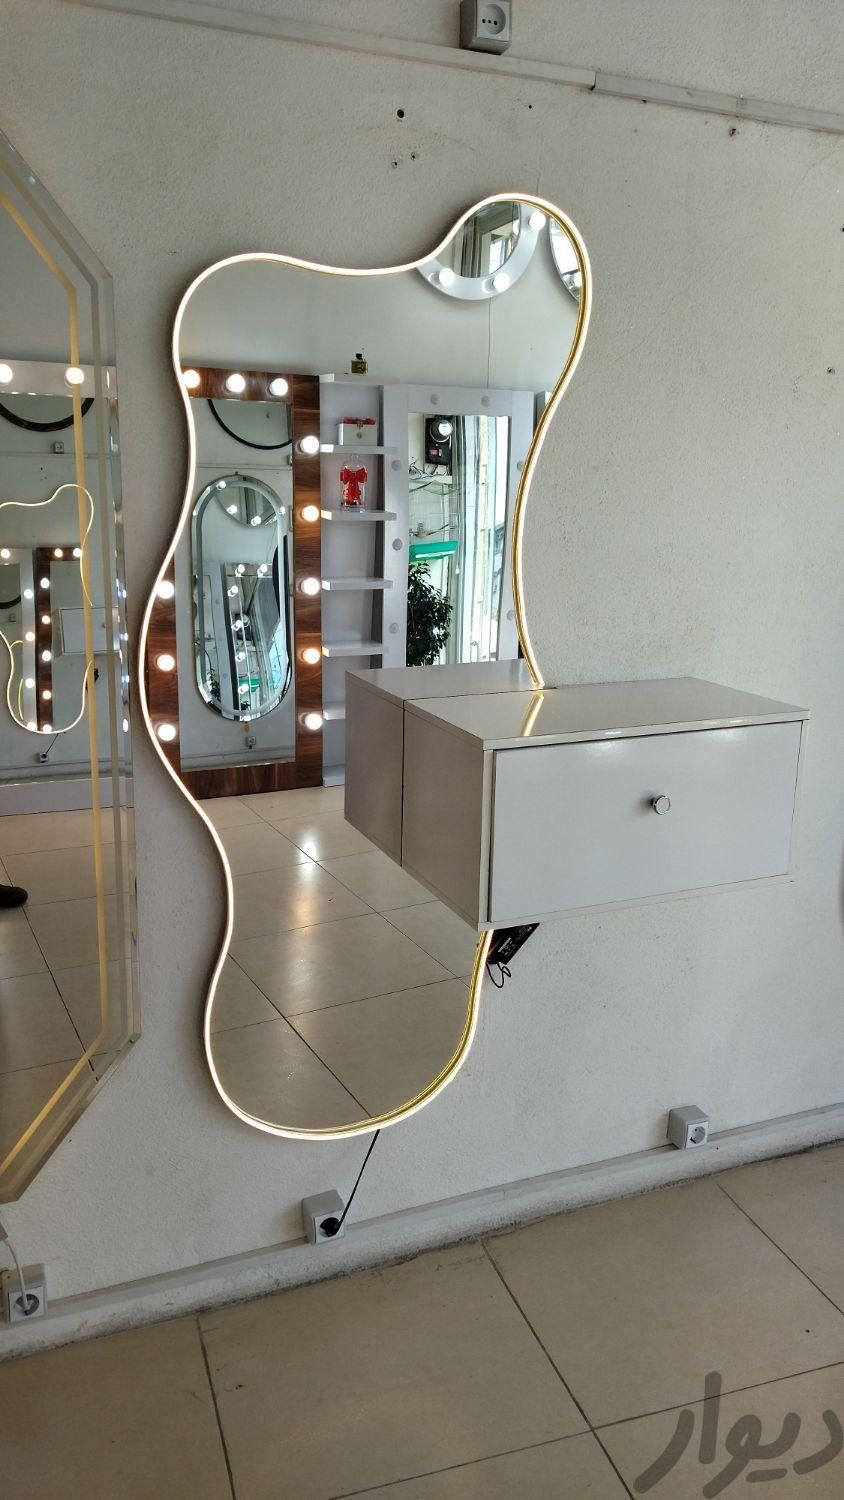 آینه دفرمه نامنظم نور لامپی|آینه|رشت, انصاری|دیوار